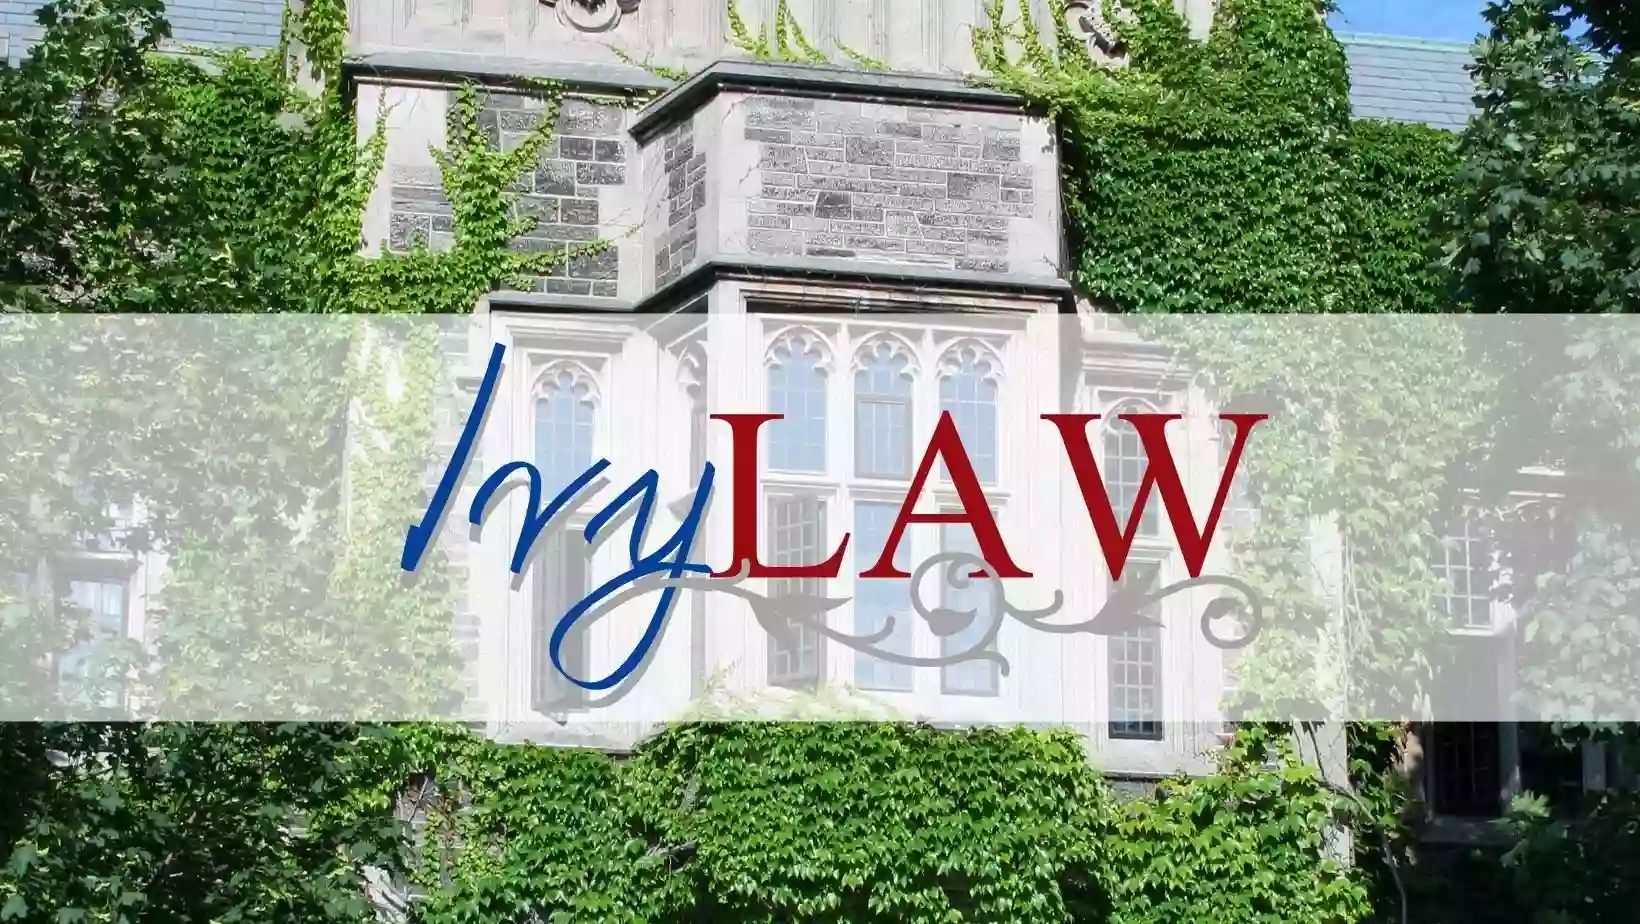 Ivy Law